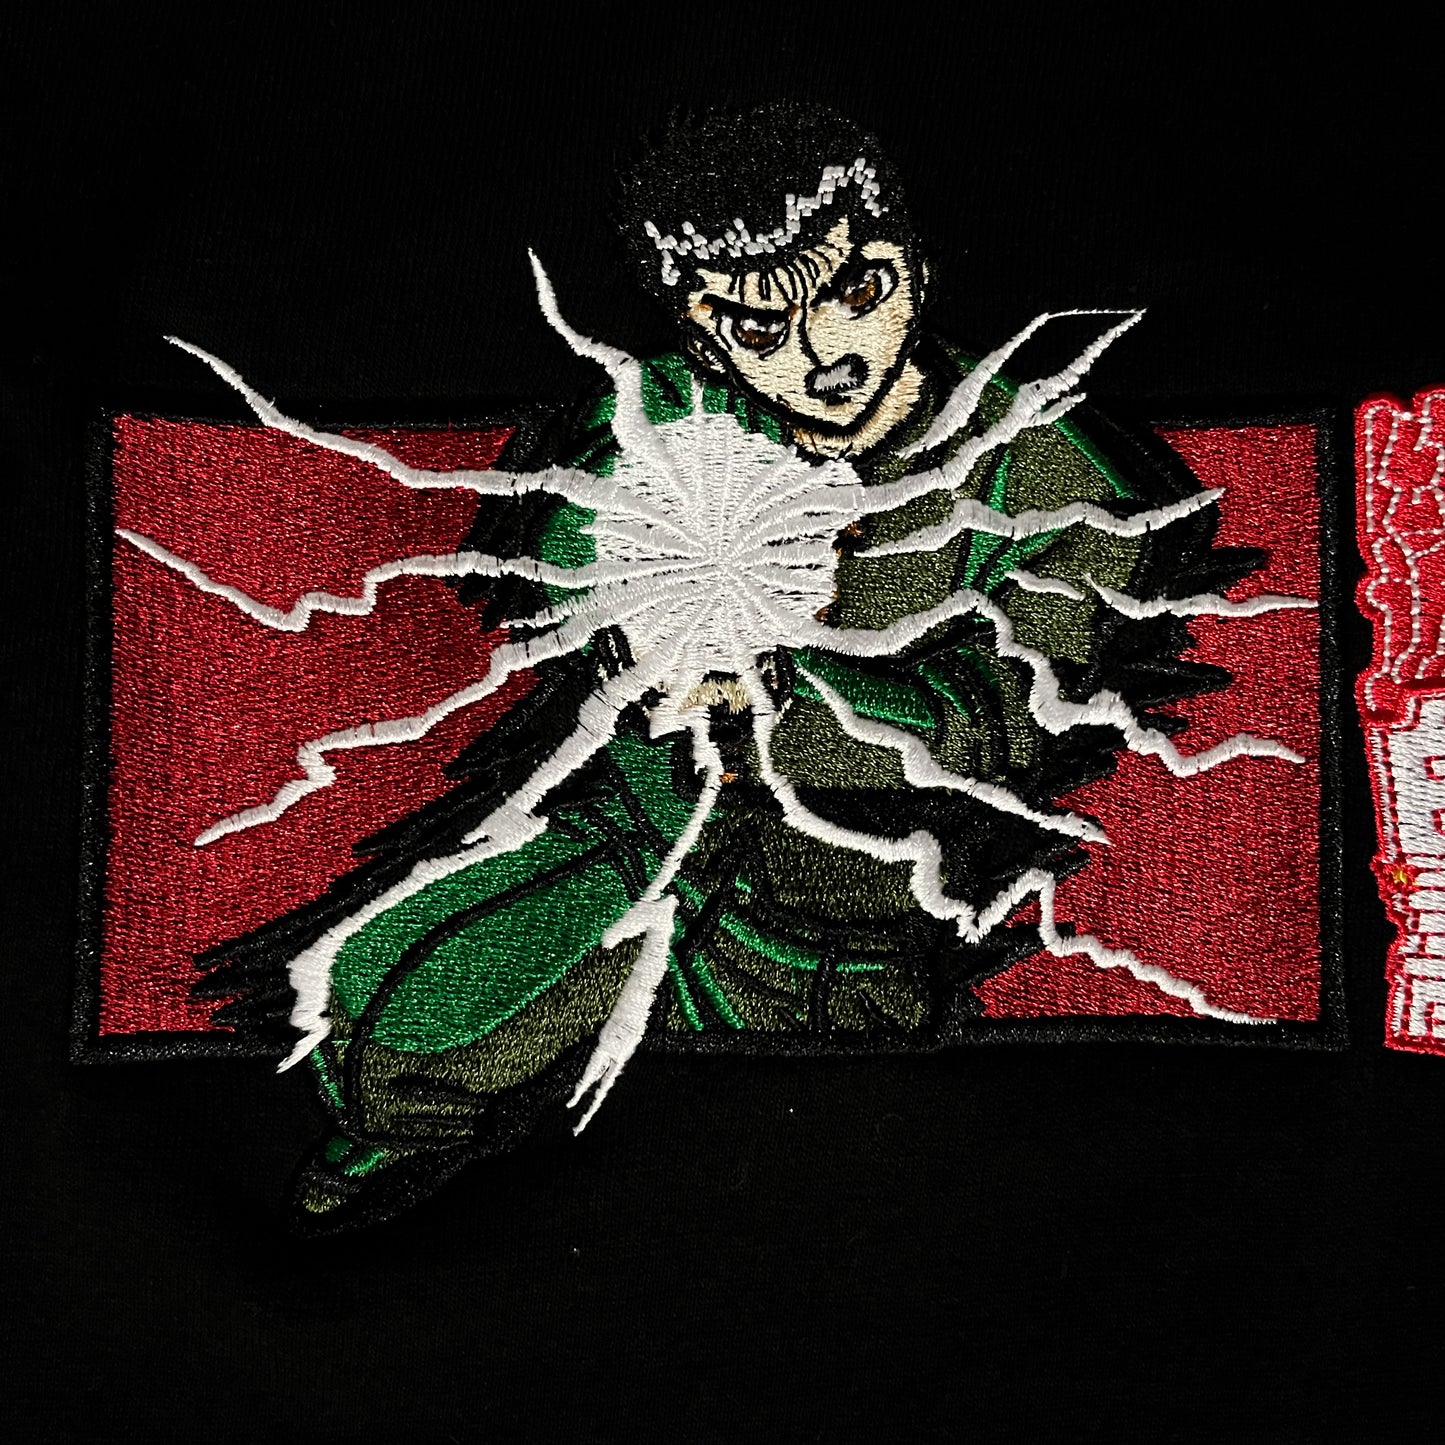 Yusuke Embroidery